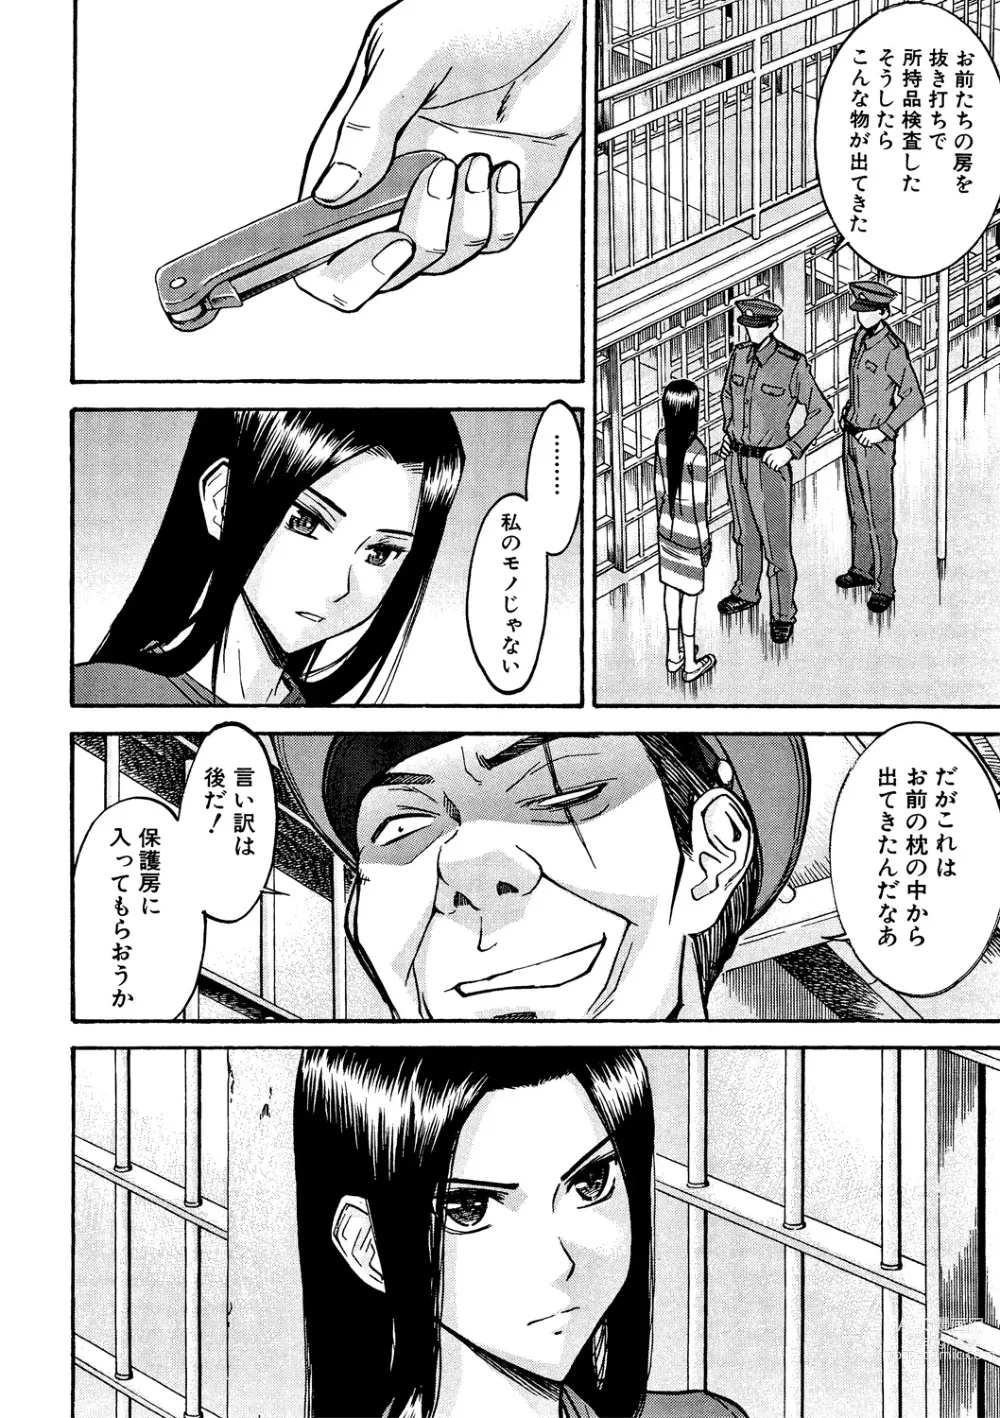 Page 7 of manga Camellia